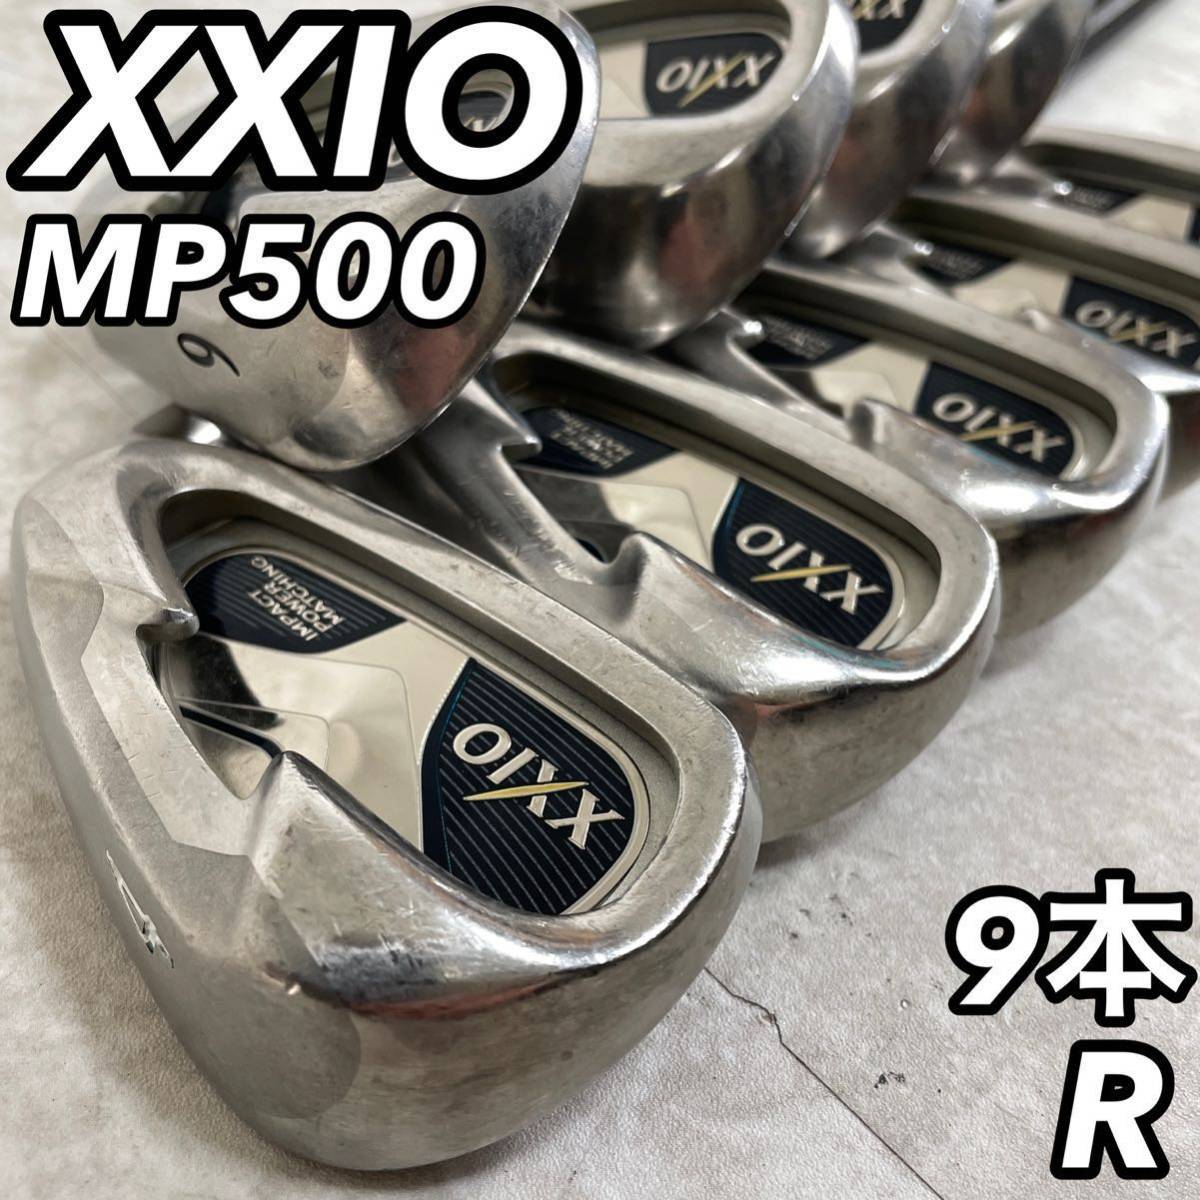 XXIO5 メンズゴルフ アイアン9本セット MP500 R カーボン 初心者